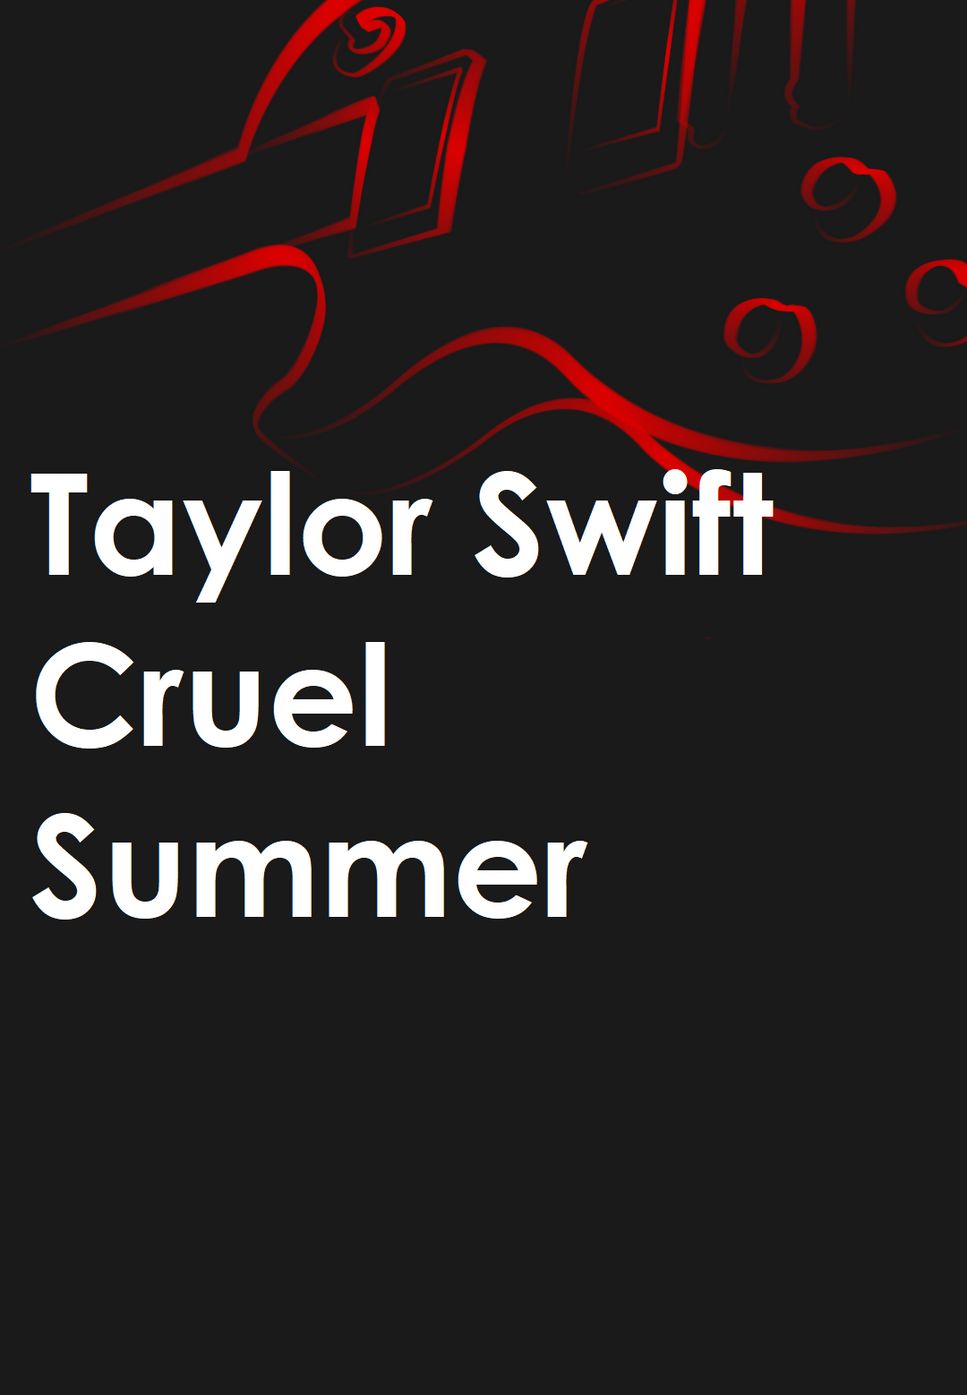 Taylor Swift - Cruel Summer by Mario Serrato